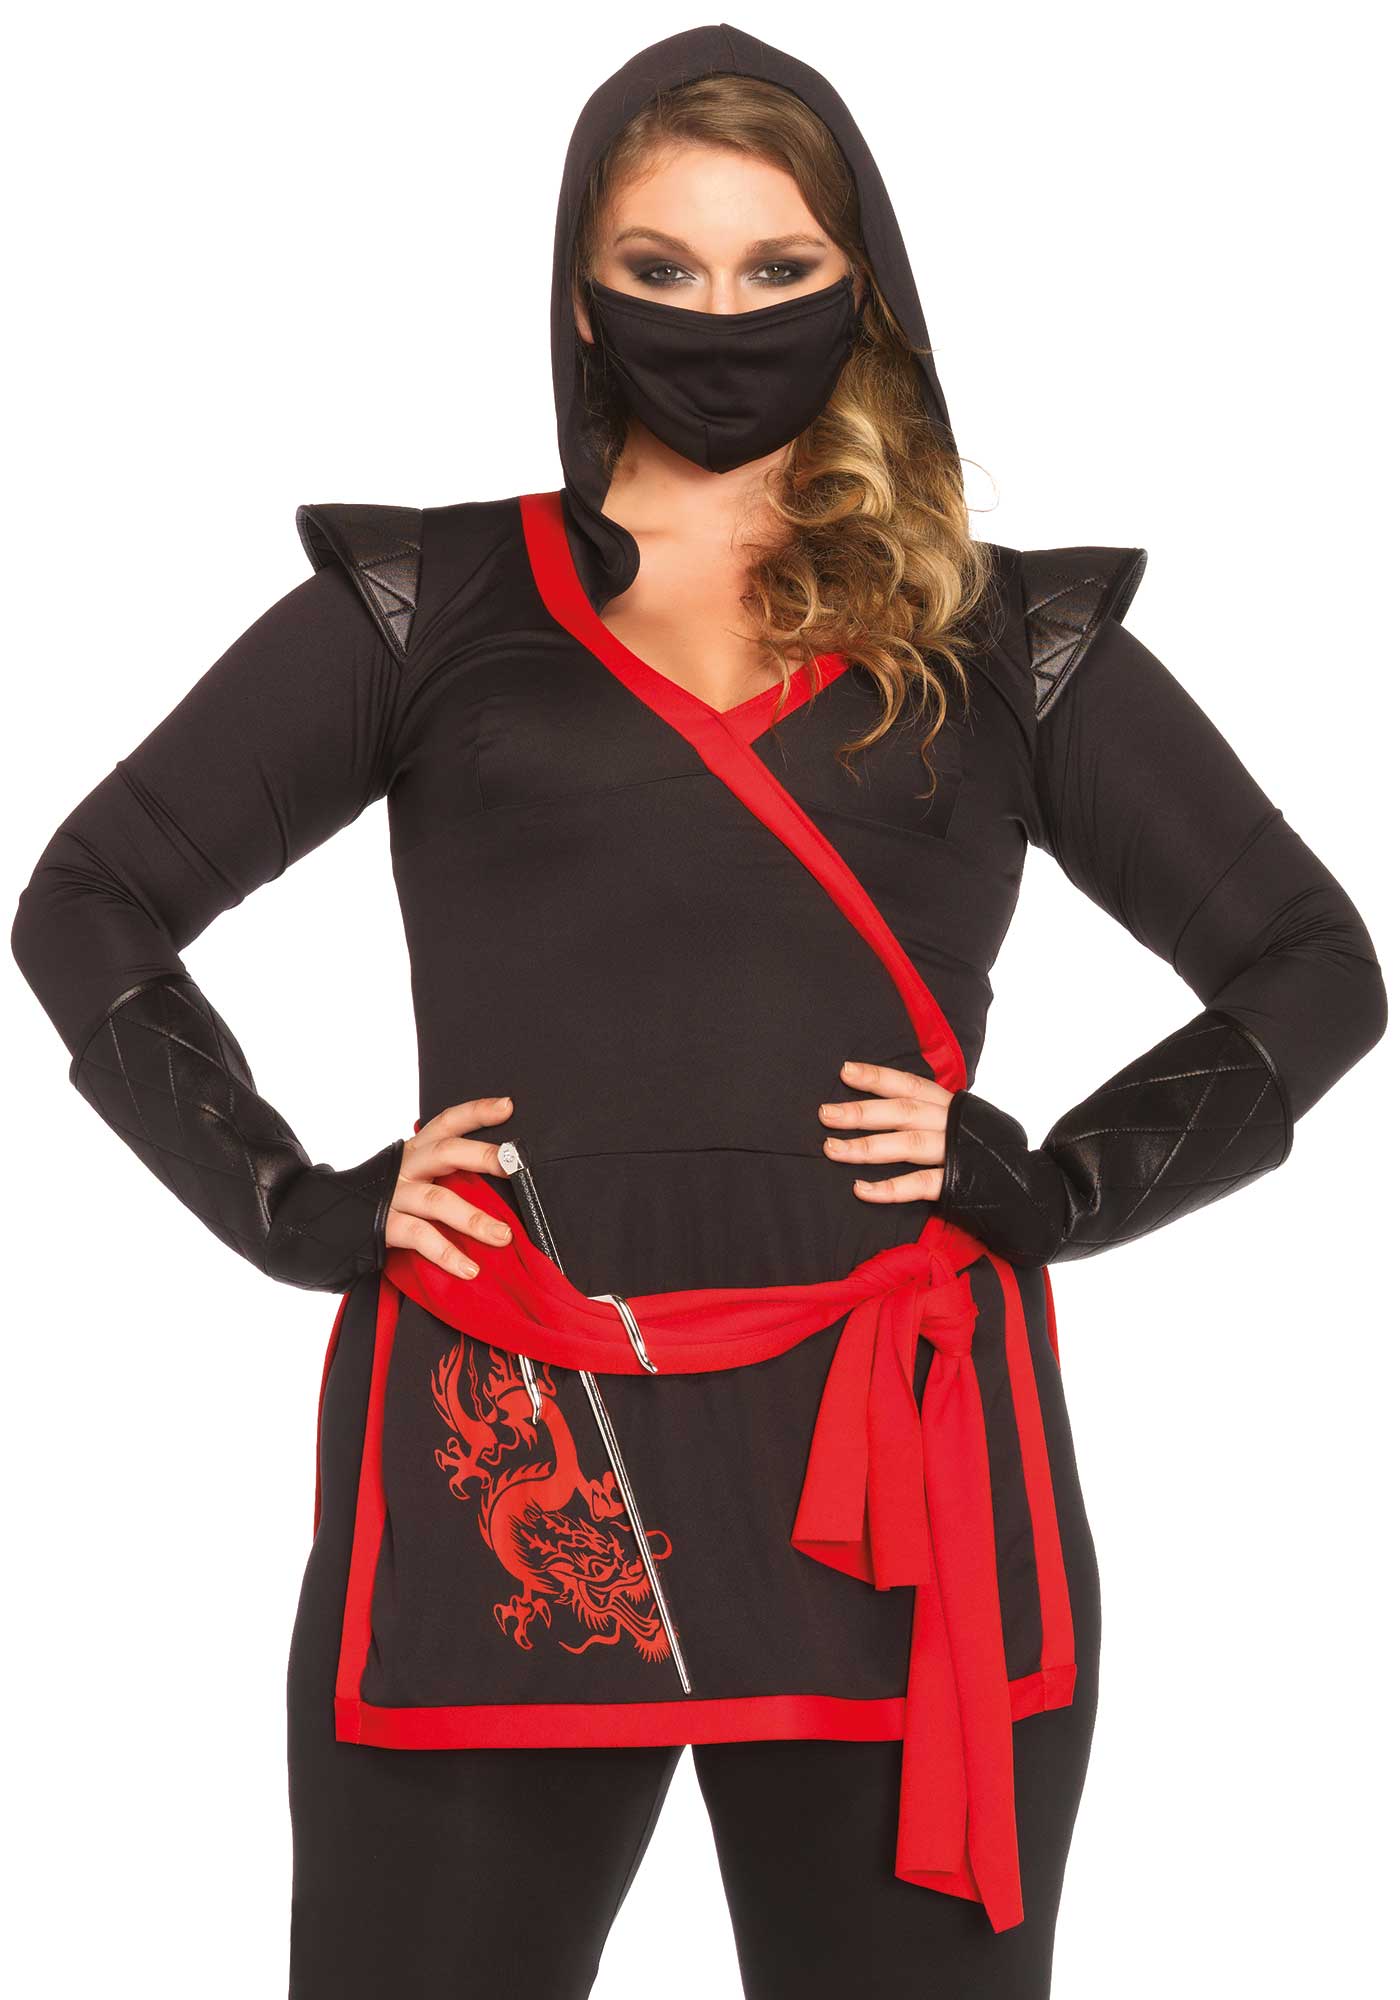 Ninja, Woman Ninja, Plus size, Plus size Ninja, Halloween, cosplay, perform...